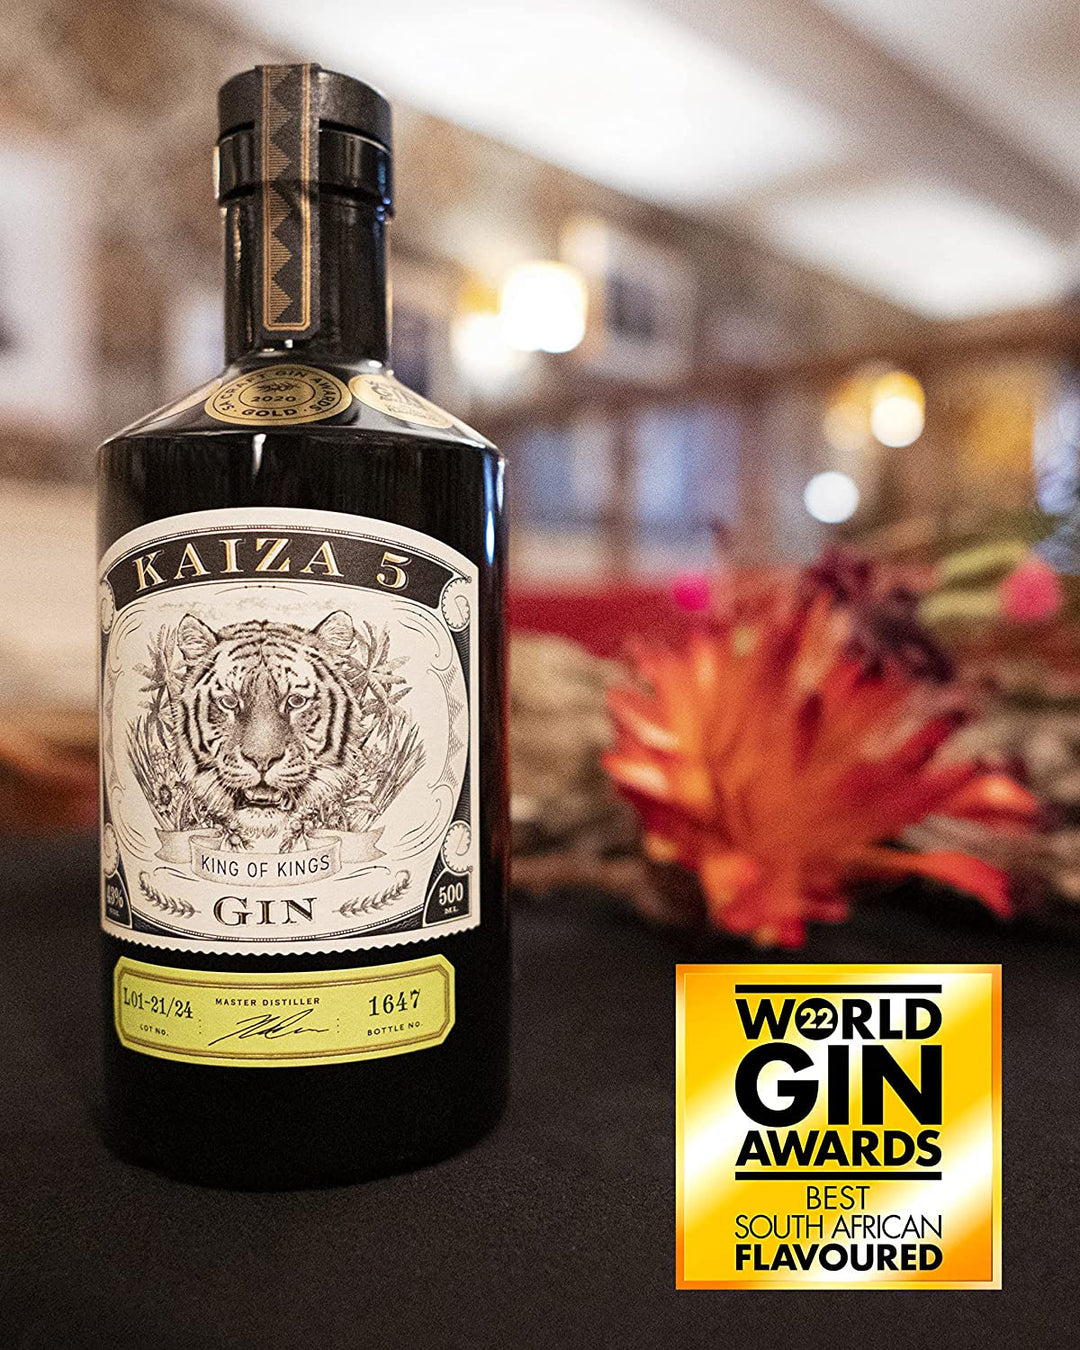 KAIZA 5 GIN – 0,7 L - 43% - Höchst prämierter Gin aus Südafrika/Kapstadt